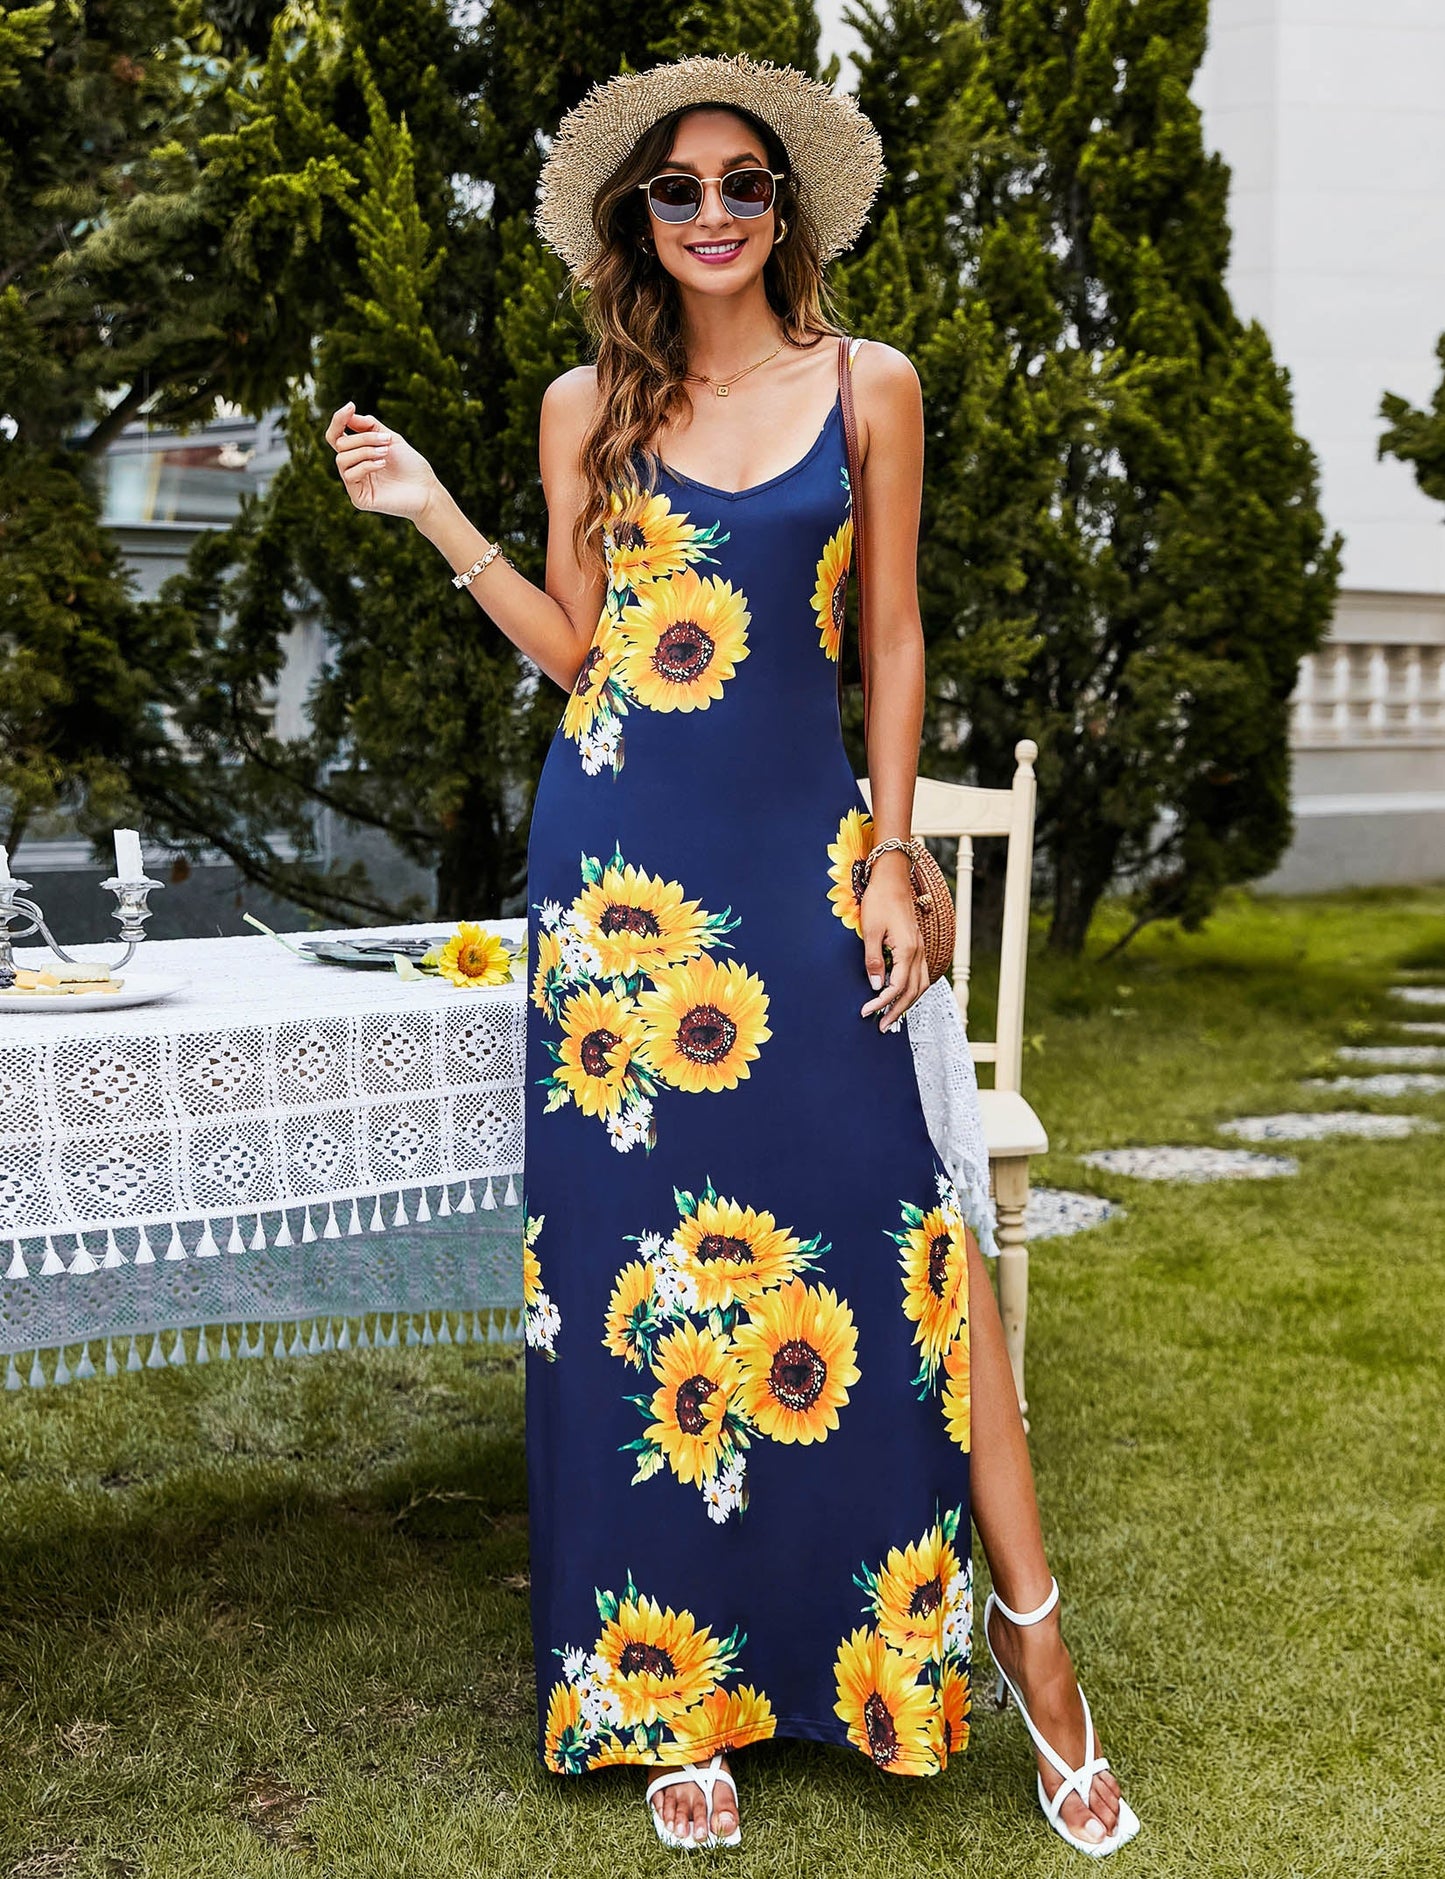 YESFASHION Women's Summer Casual Sleeveless V Neck Floral Dress Blue